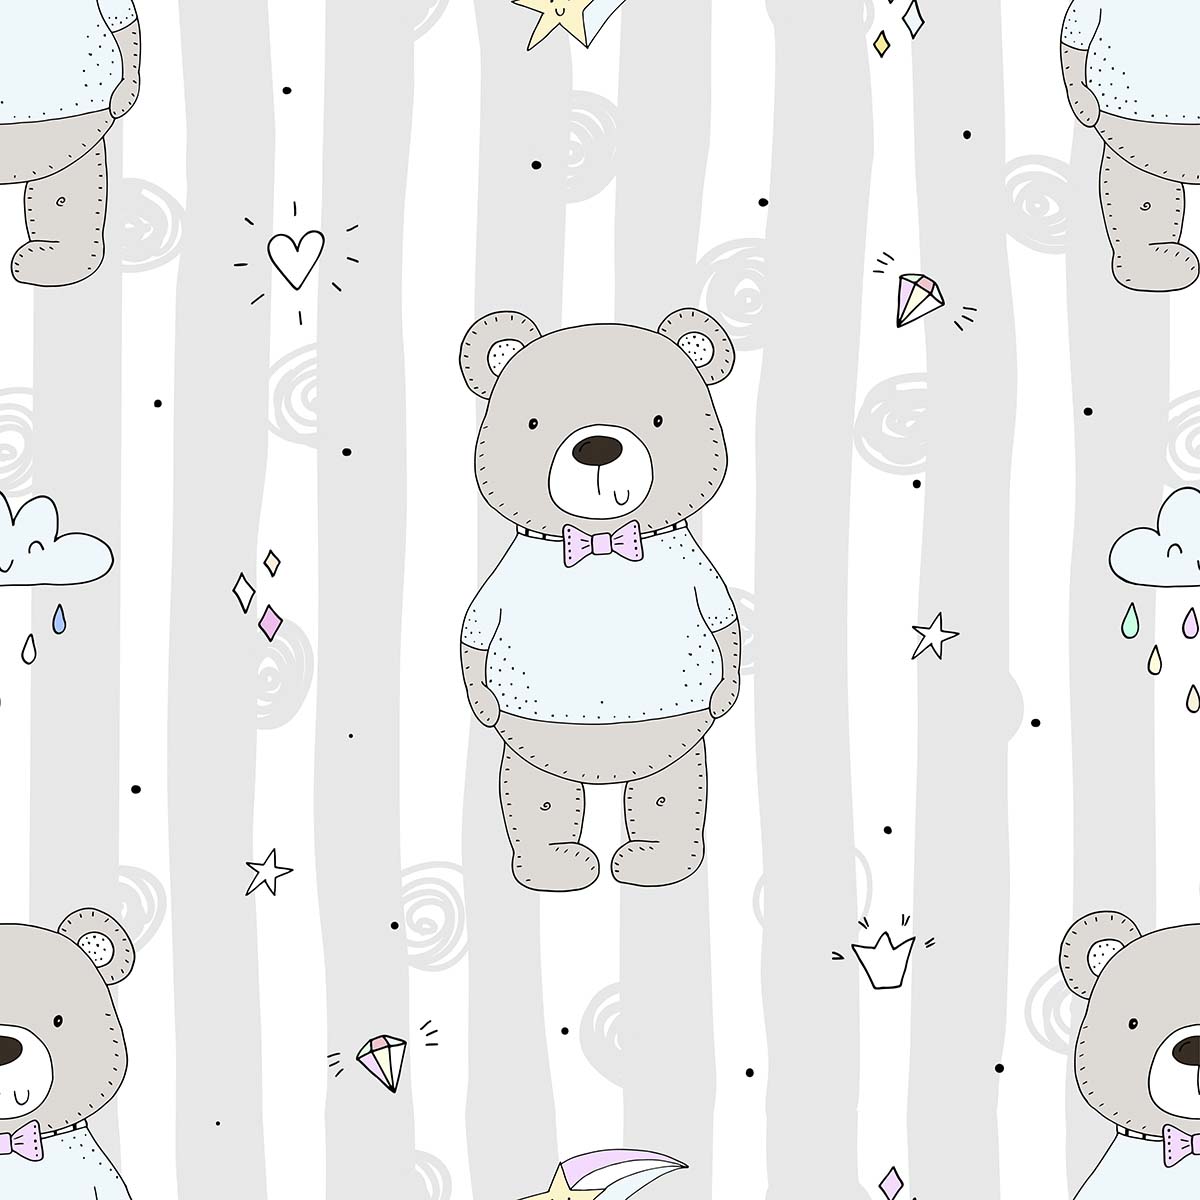 A pattern of a teddy bear